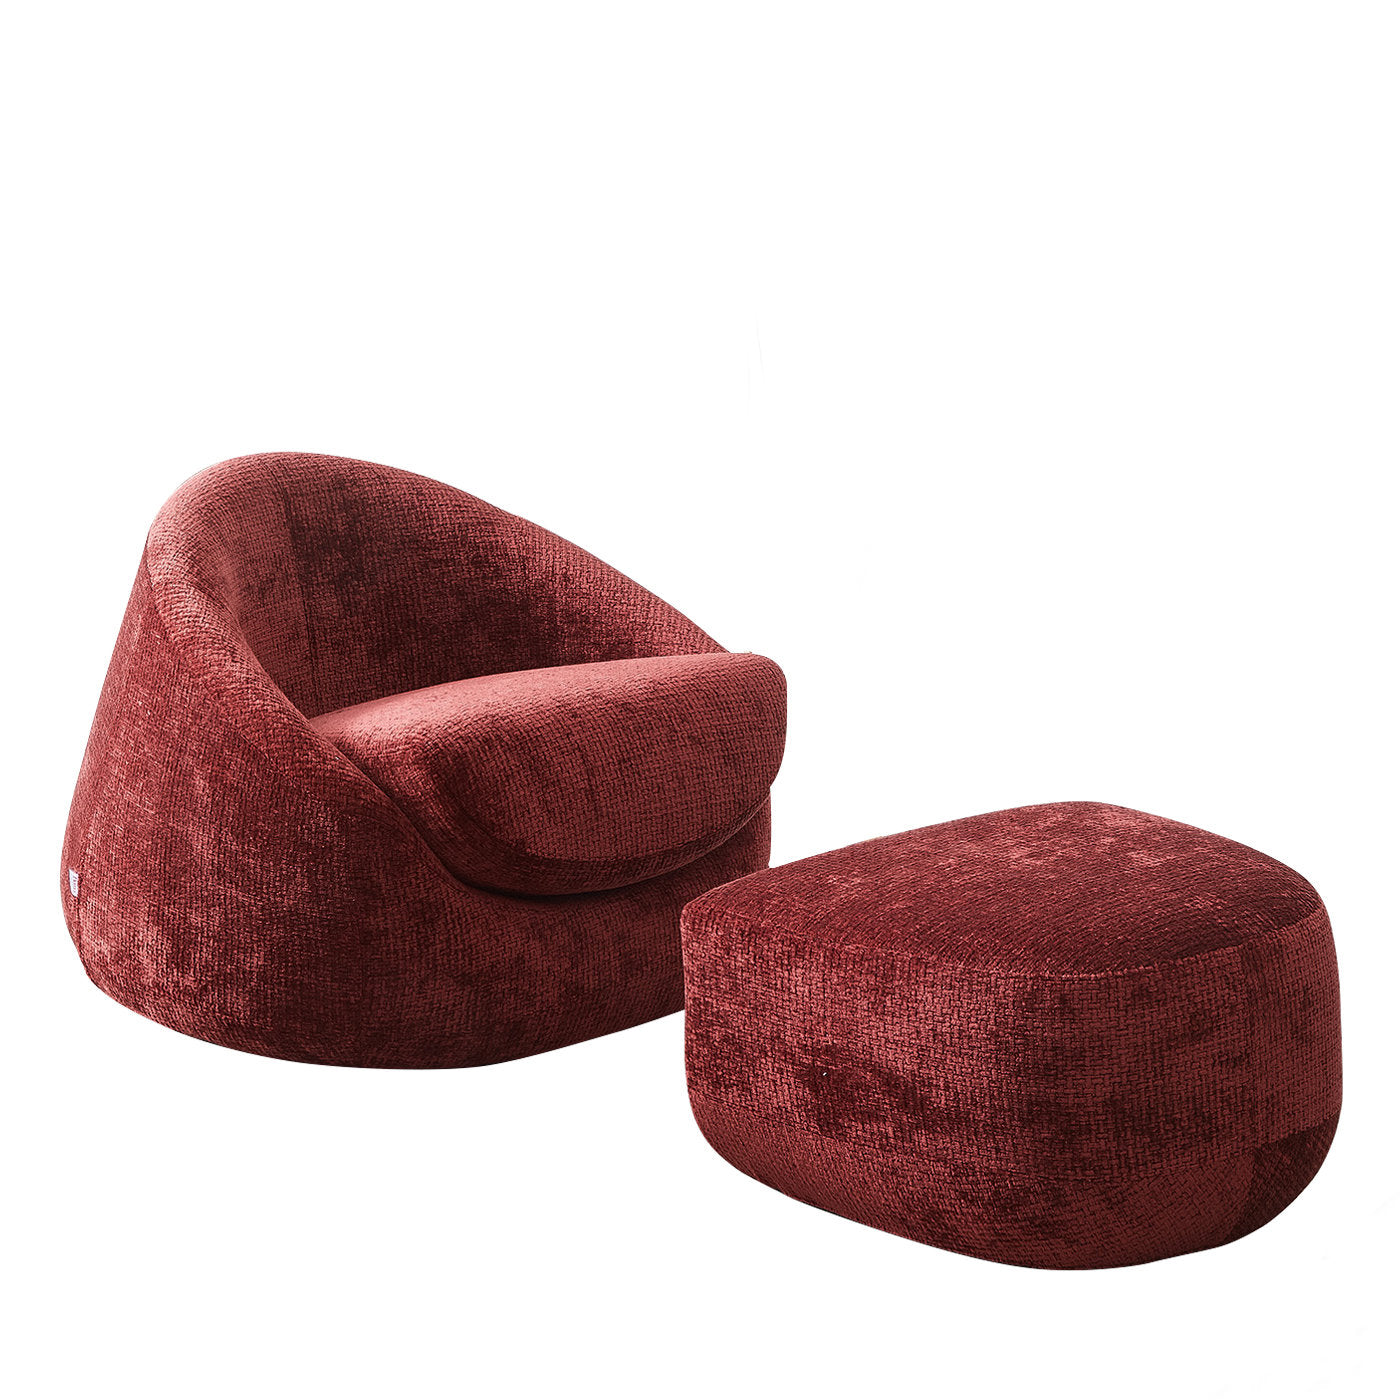 Cuccia Red Armchair and Ottoman by Dema Design - Main view